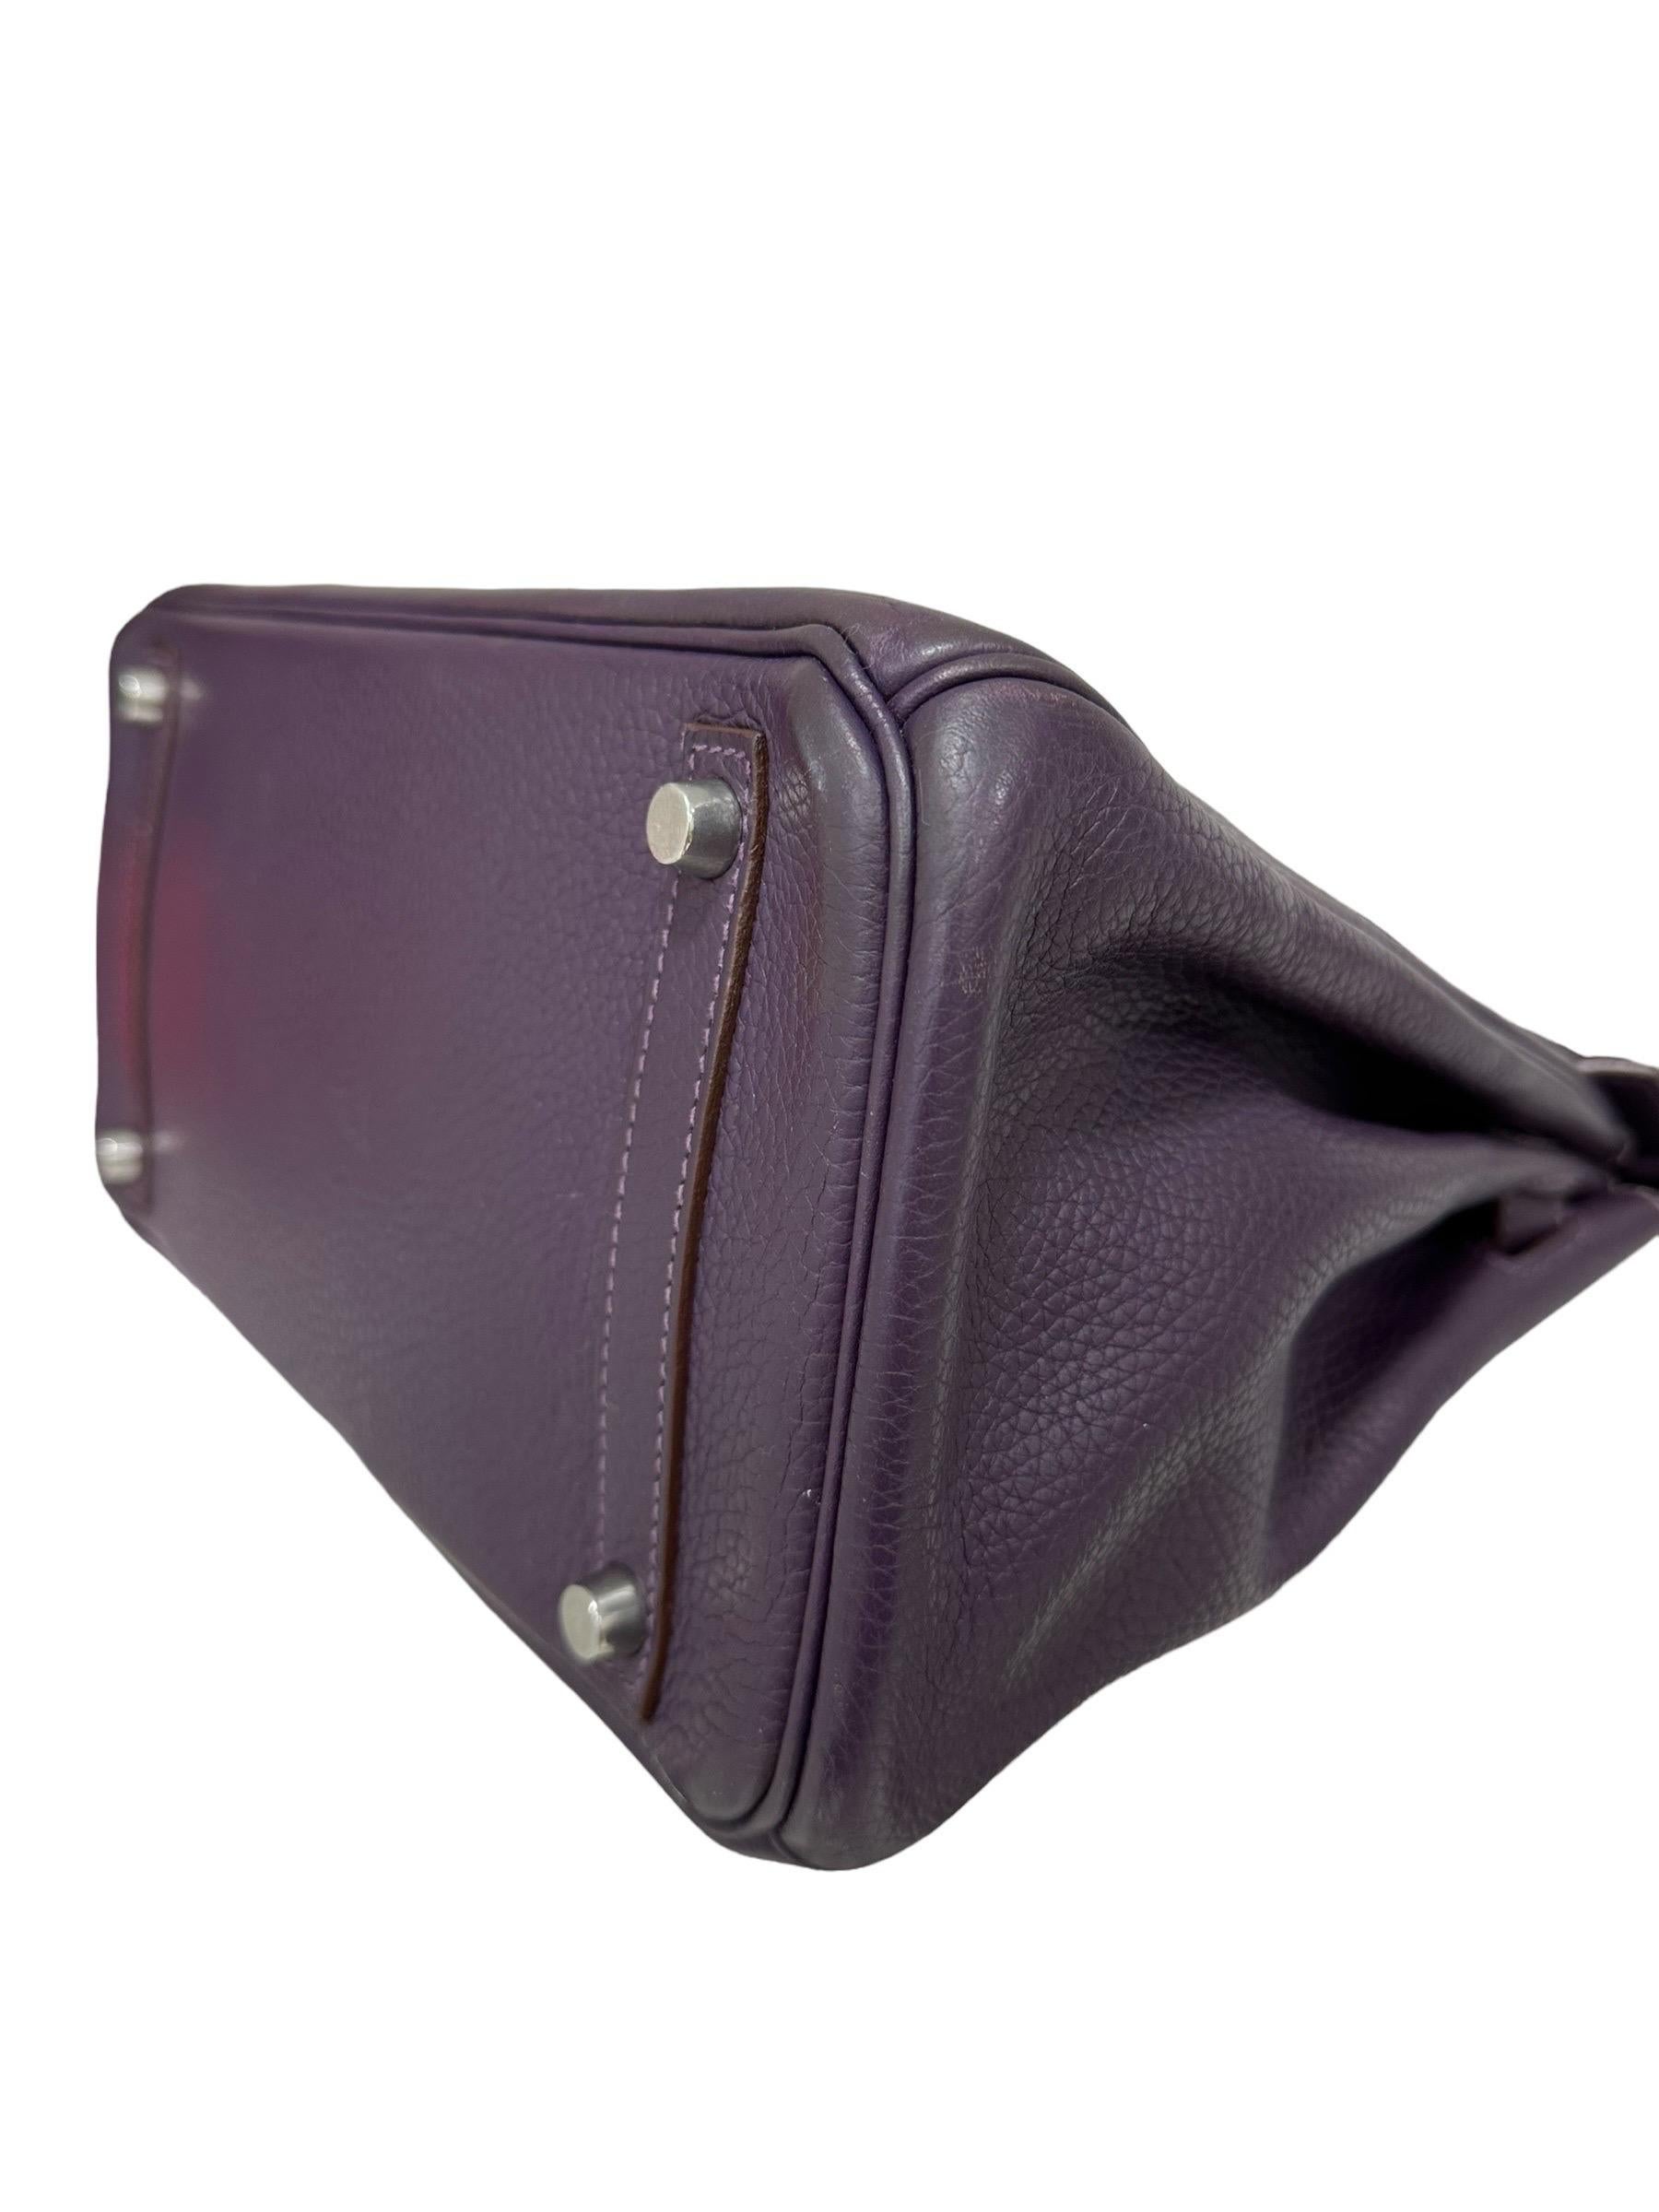 2007 Hermès Birkin 30 Clemence Leather Violet Raisin Top Handle Bag For Sale 9